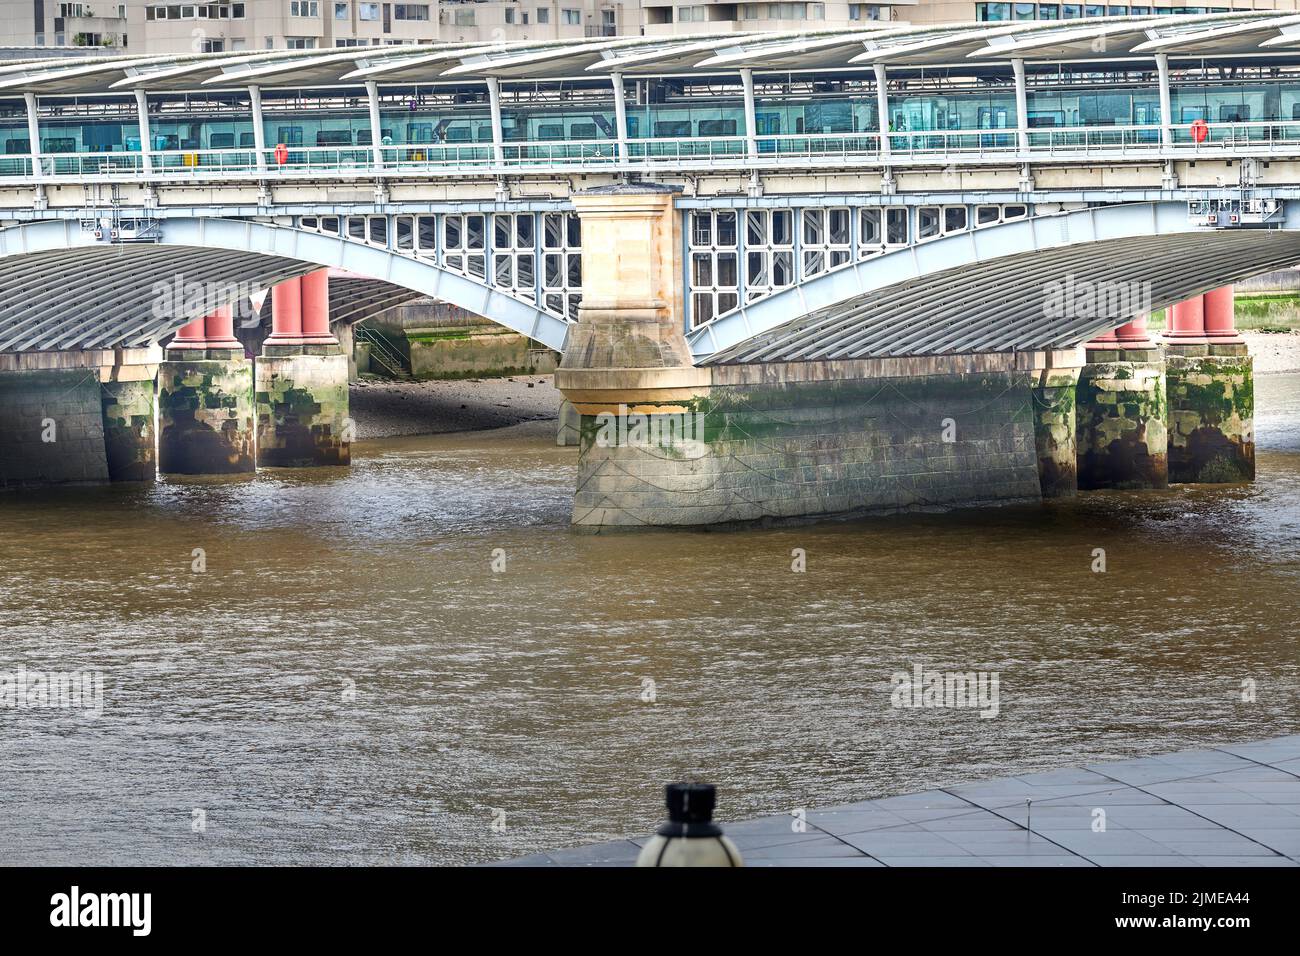 Blackfriars rail station bridge, over the river Thames,, London, England. Stock Photo